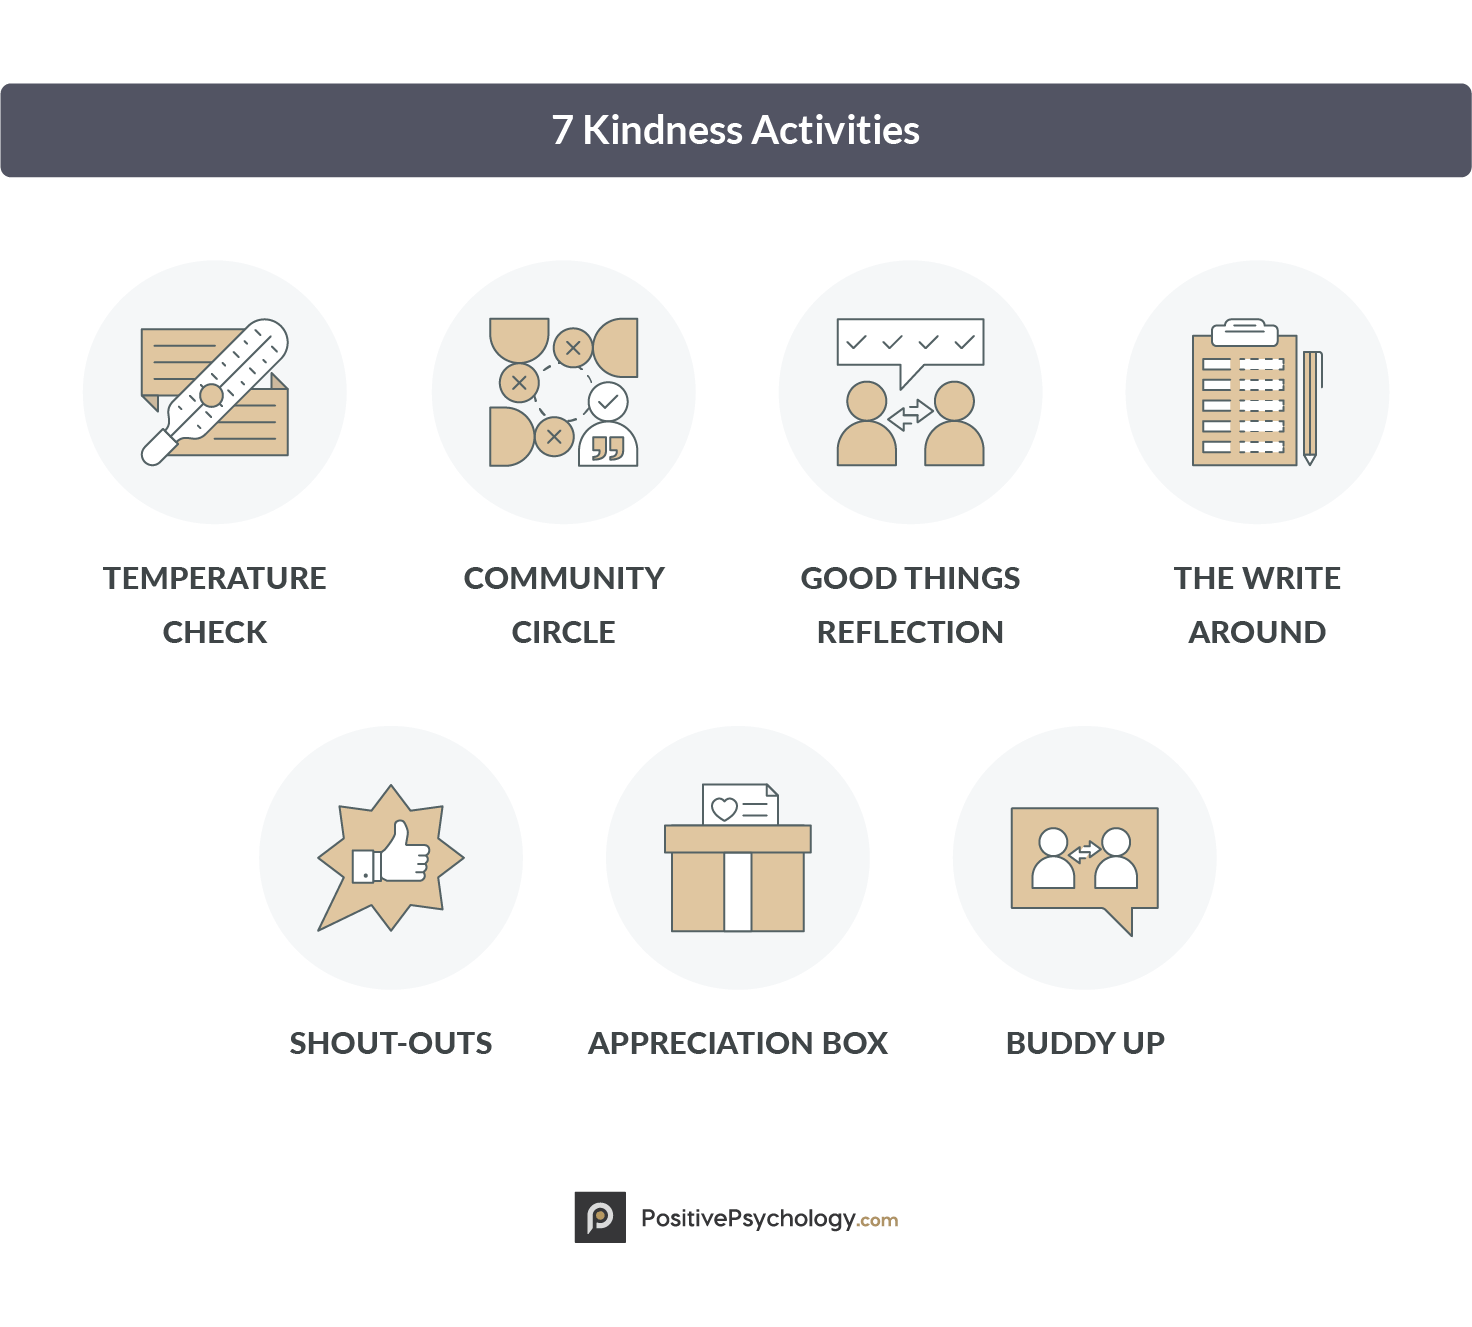 7 Kindness Activities